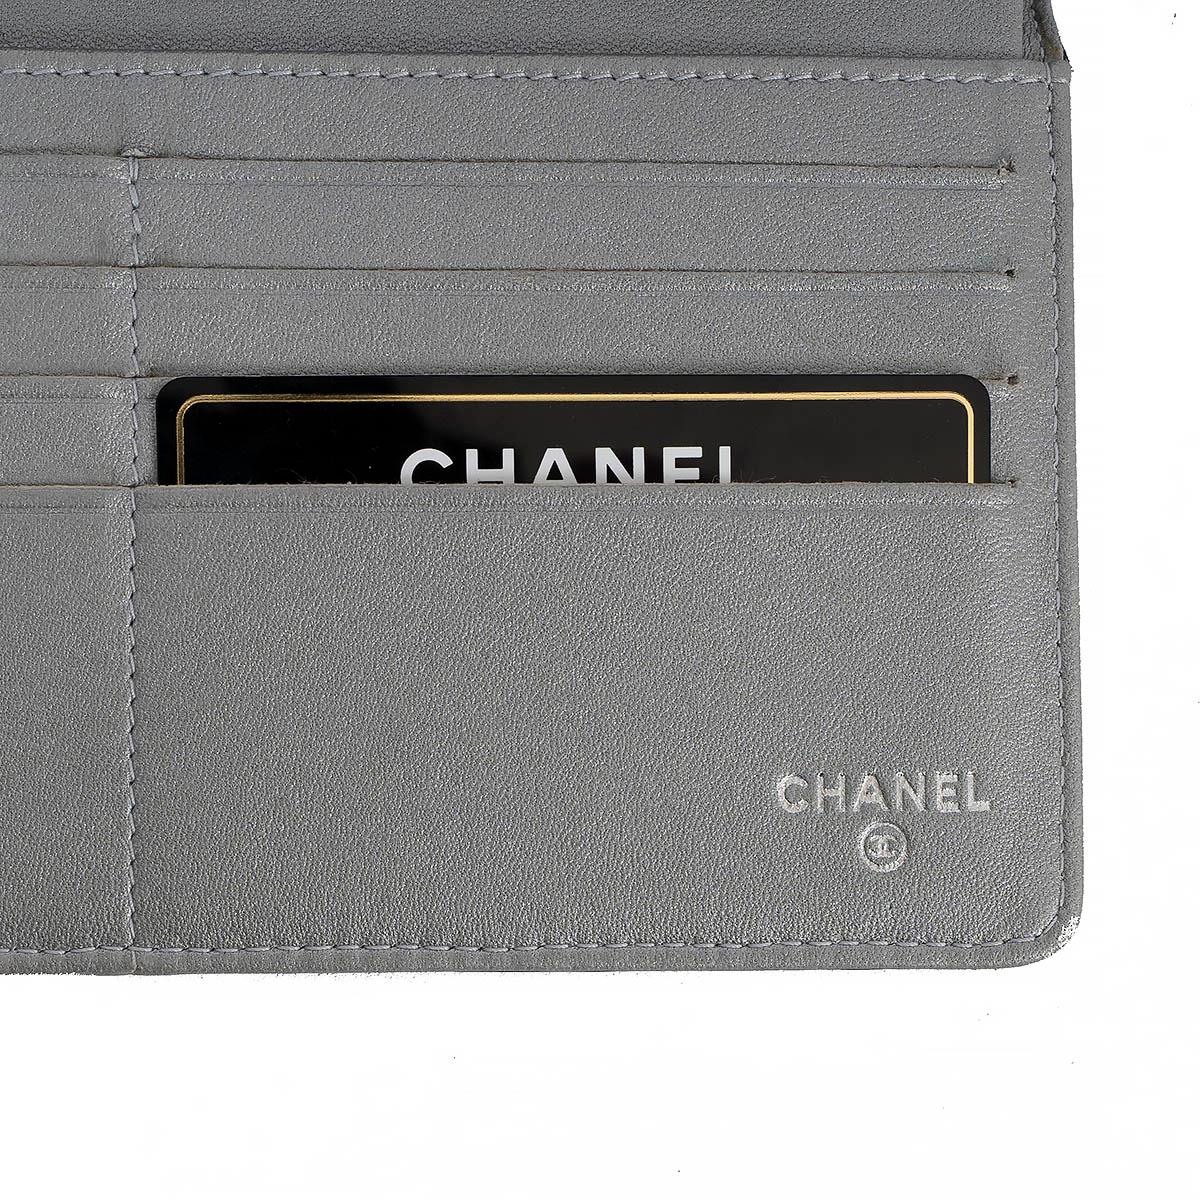 CHANEL black leather CAMELLIA EMBOSSED Large Wallet For Sale 2